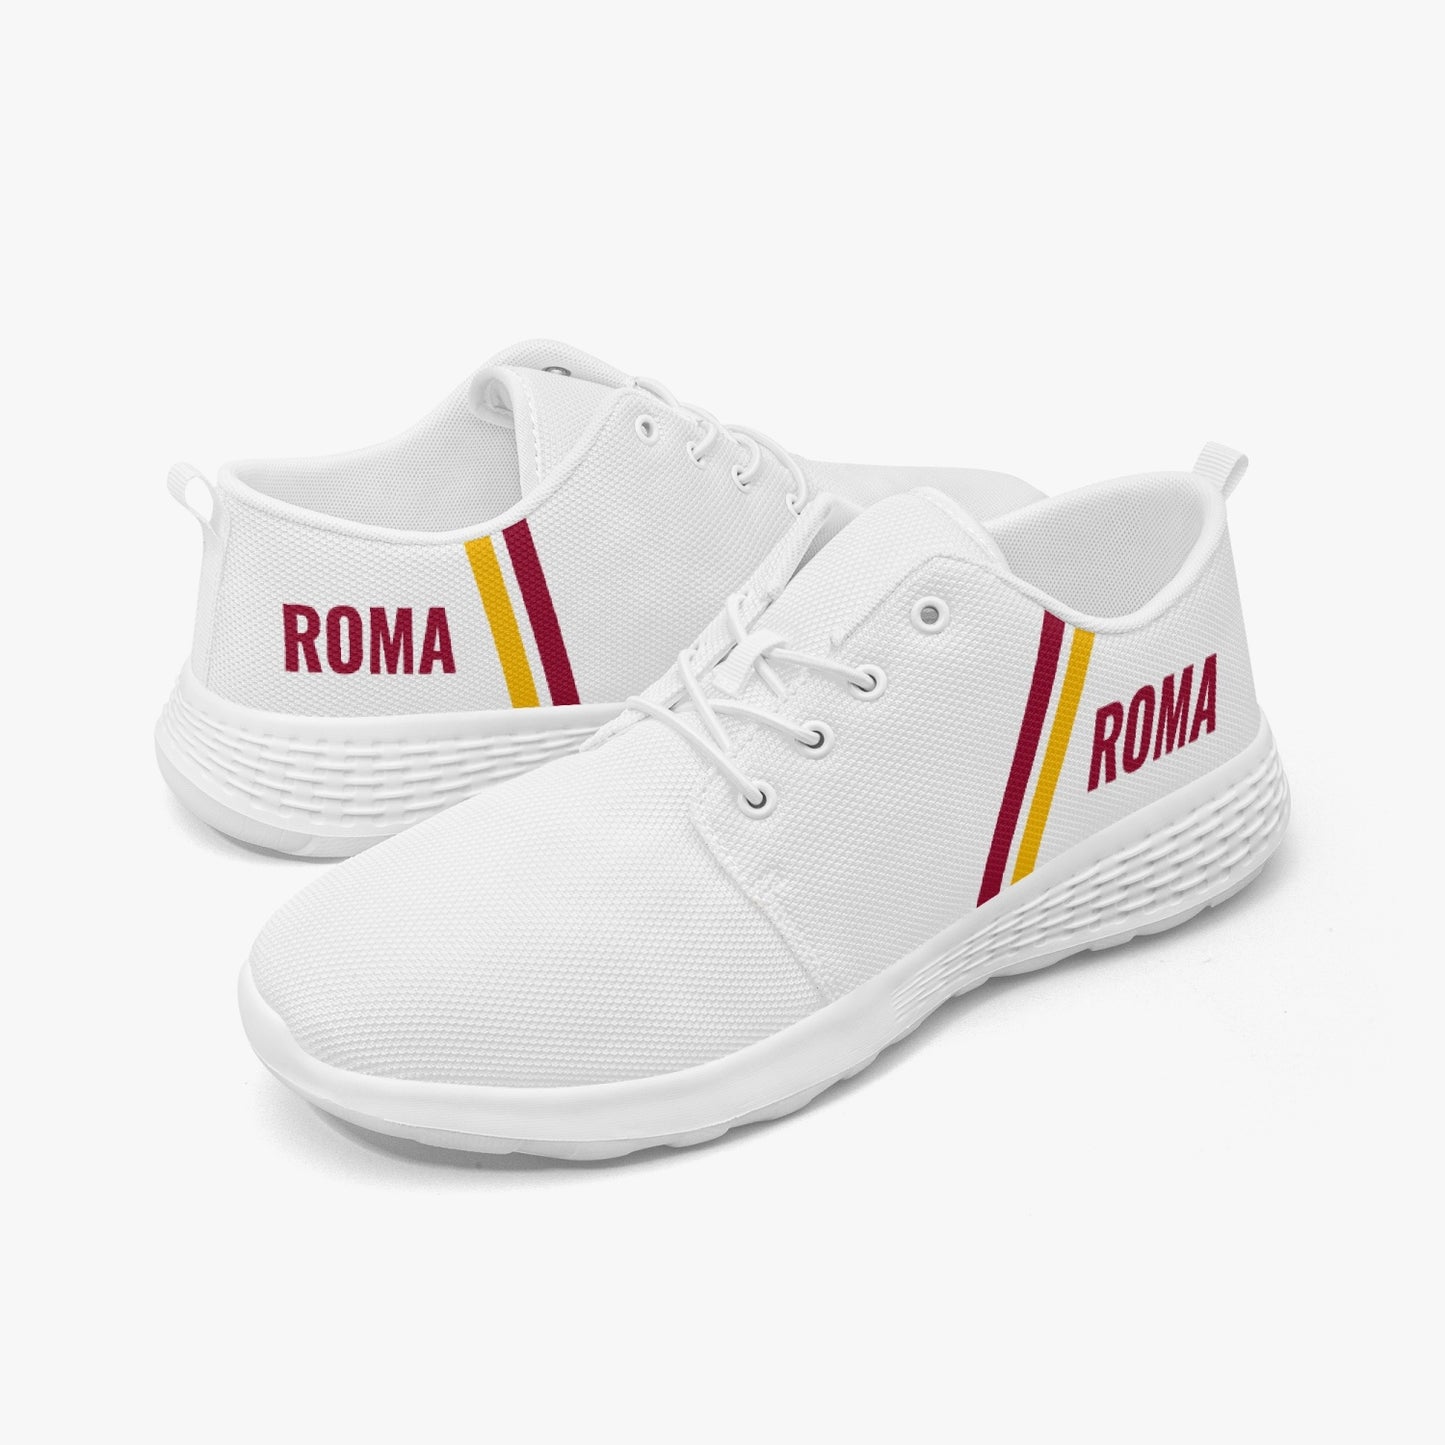 Roma Running Shoes - men's /women's sizes